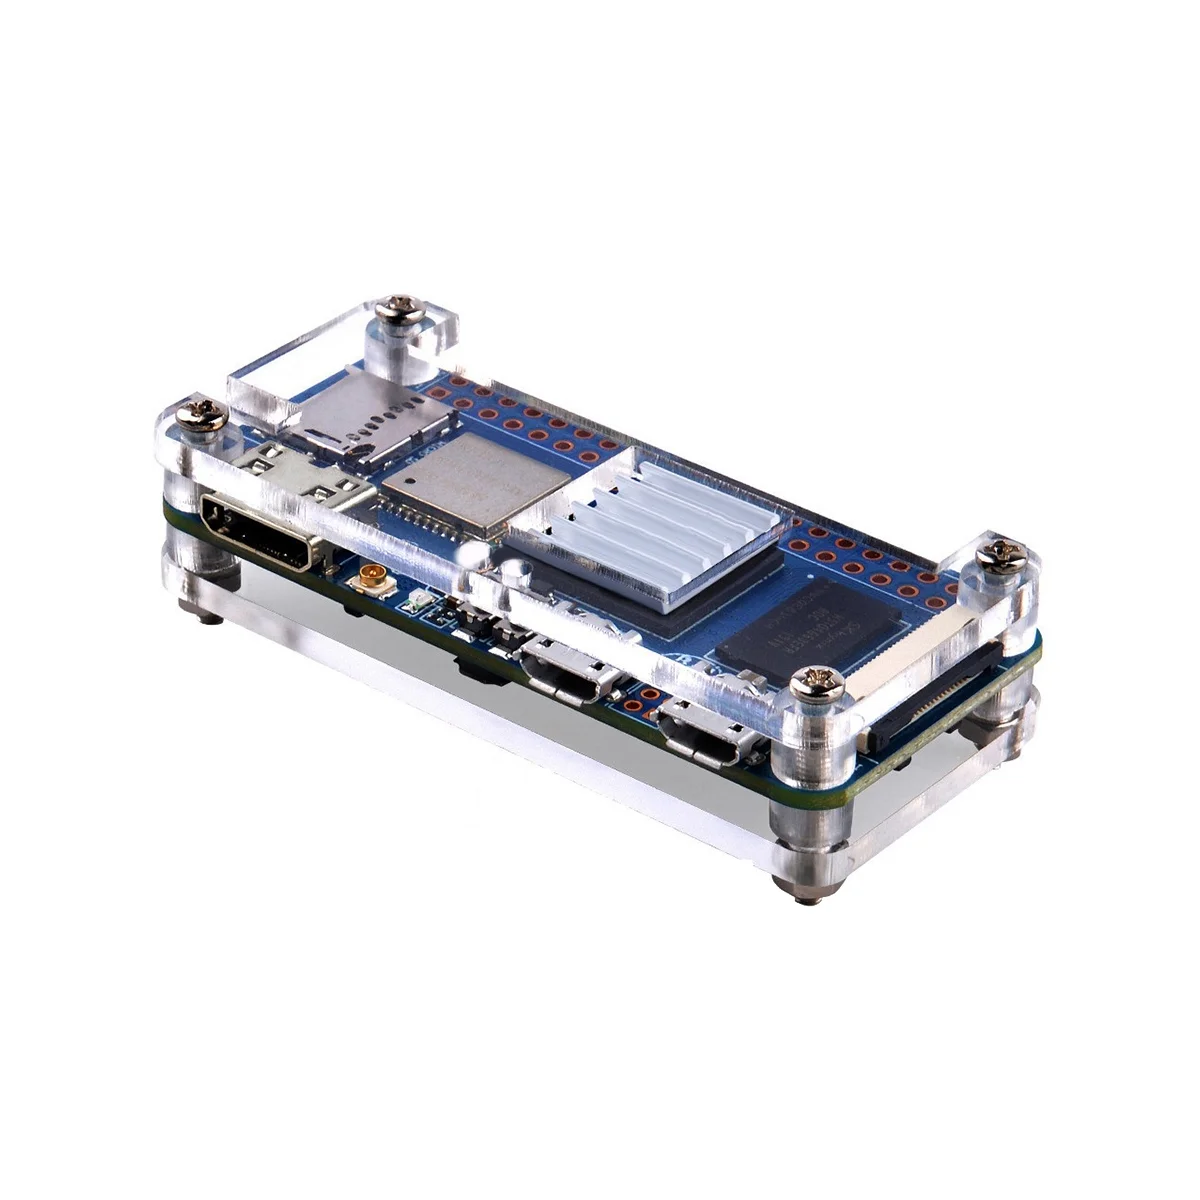 For Banana Pi BPI-M2 Zero Allwinner H3 4-Core 512MB DDR3 RAM Open Source PC Development Board+Acrylic Case+Heat Sink Kit